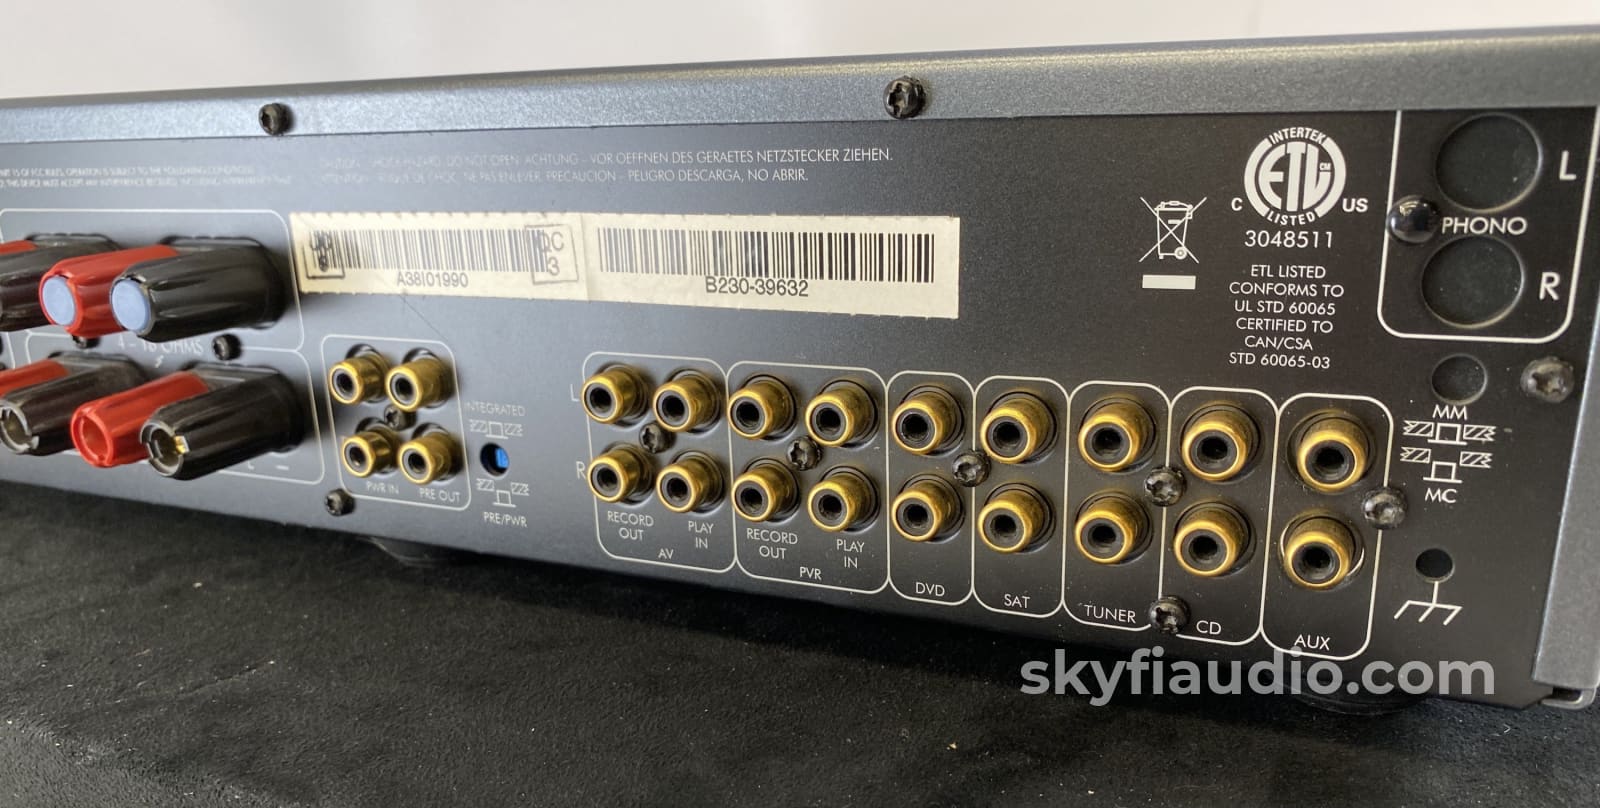 Arcam Fmj A38 Integrated Amplifier - Complete Set